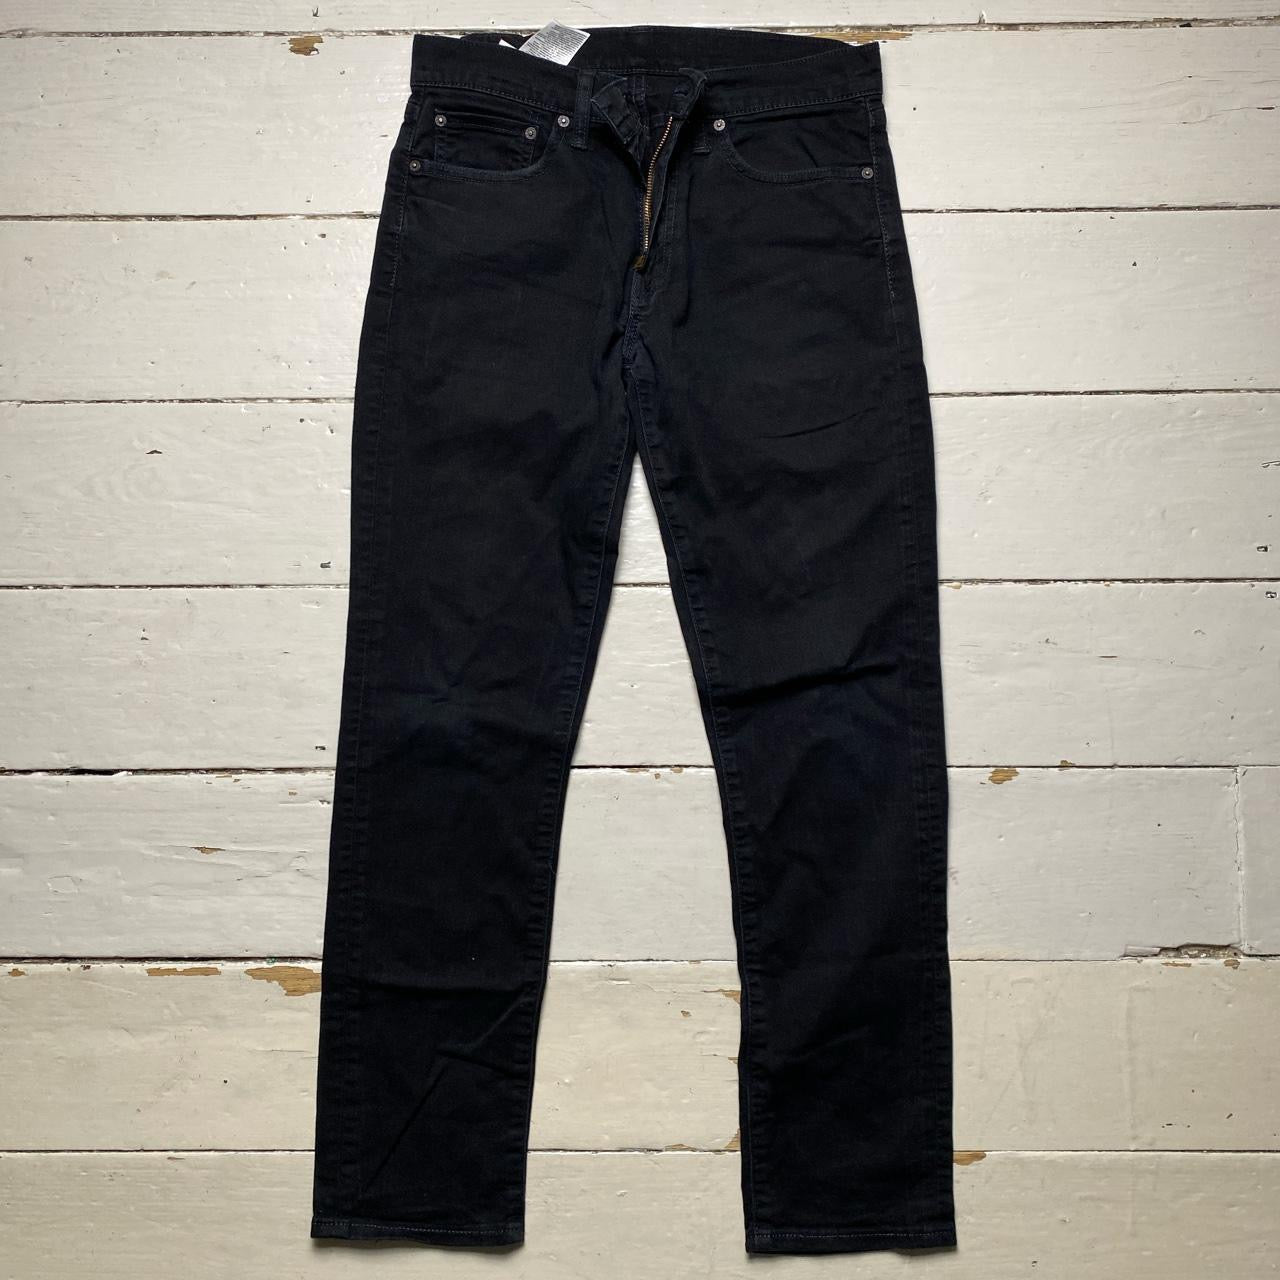 Levis Jet Black Slim Jeans (32/30)